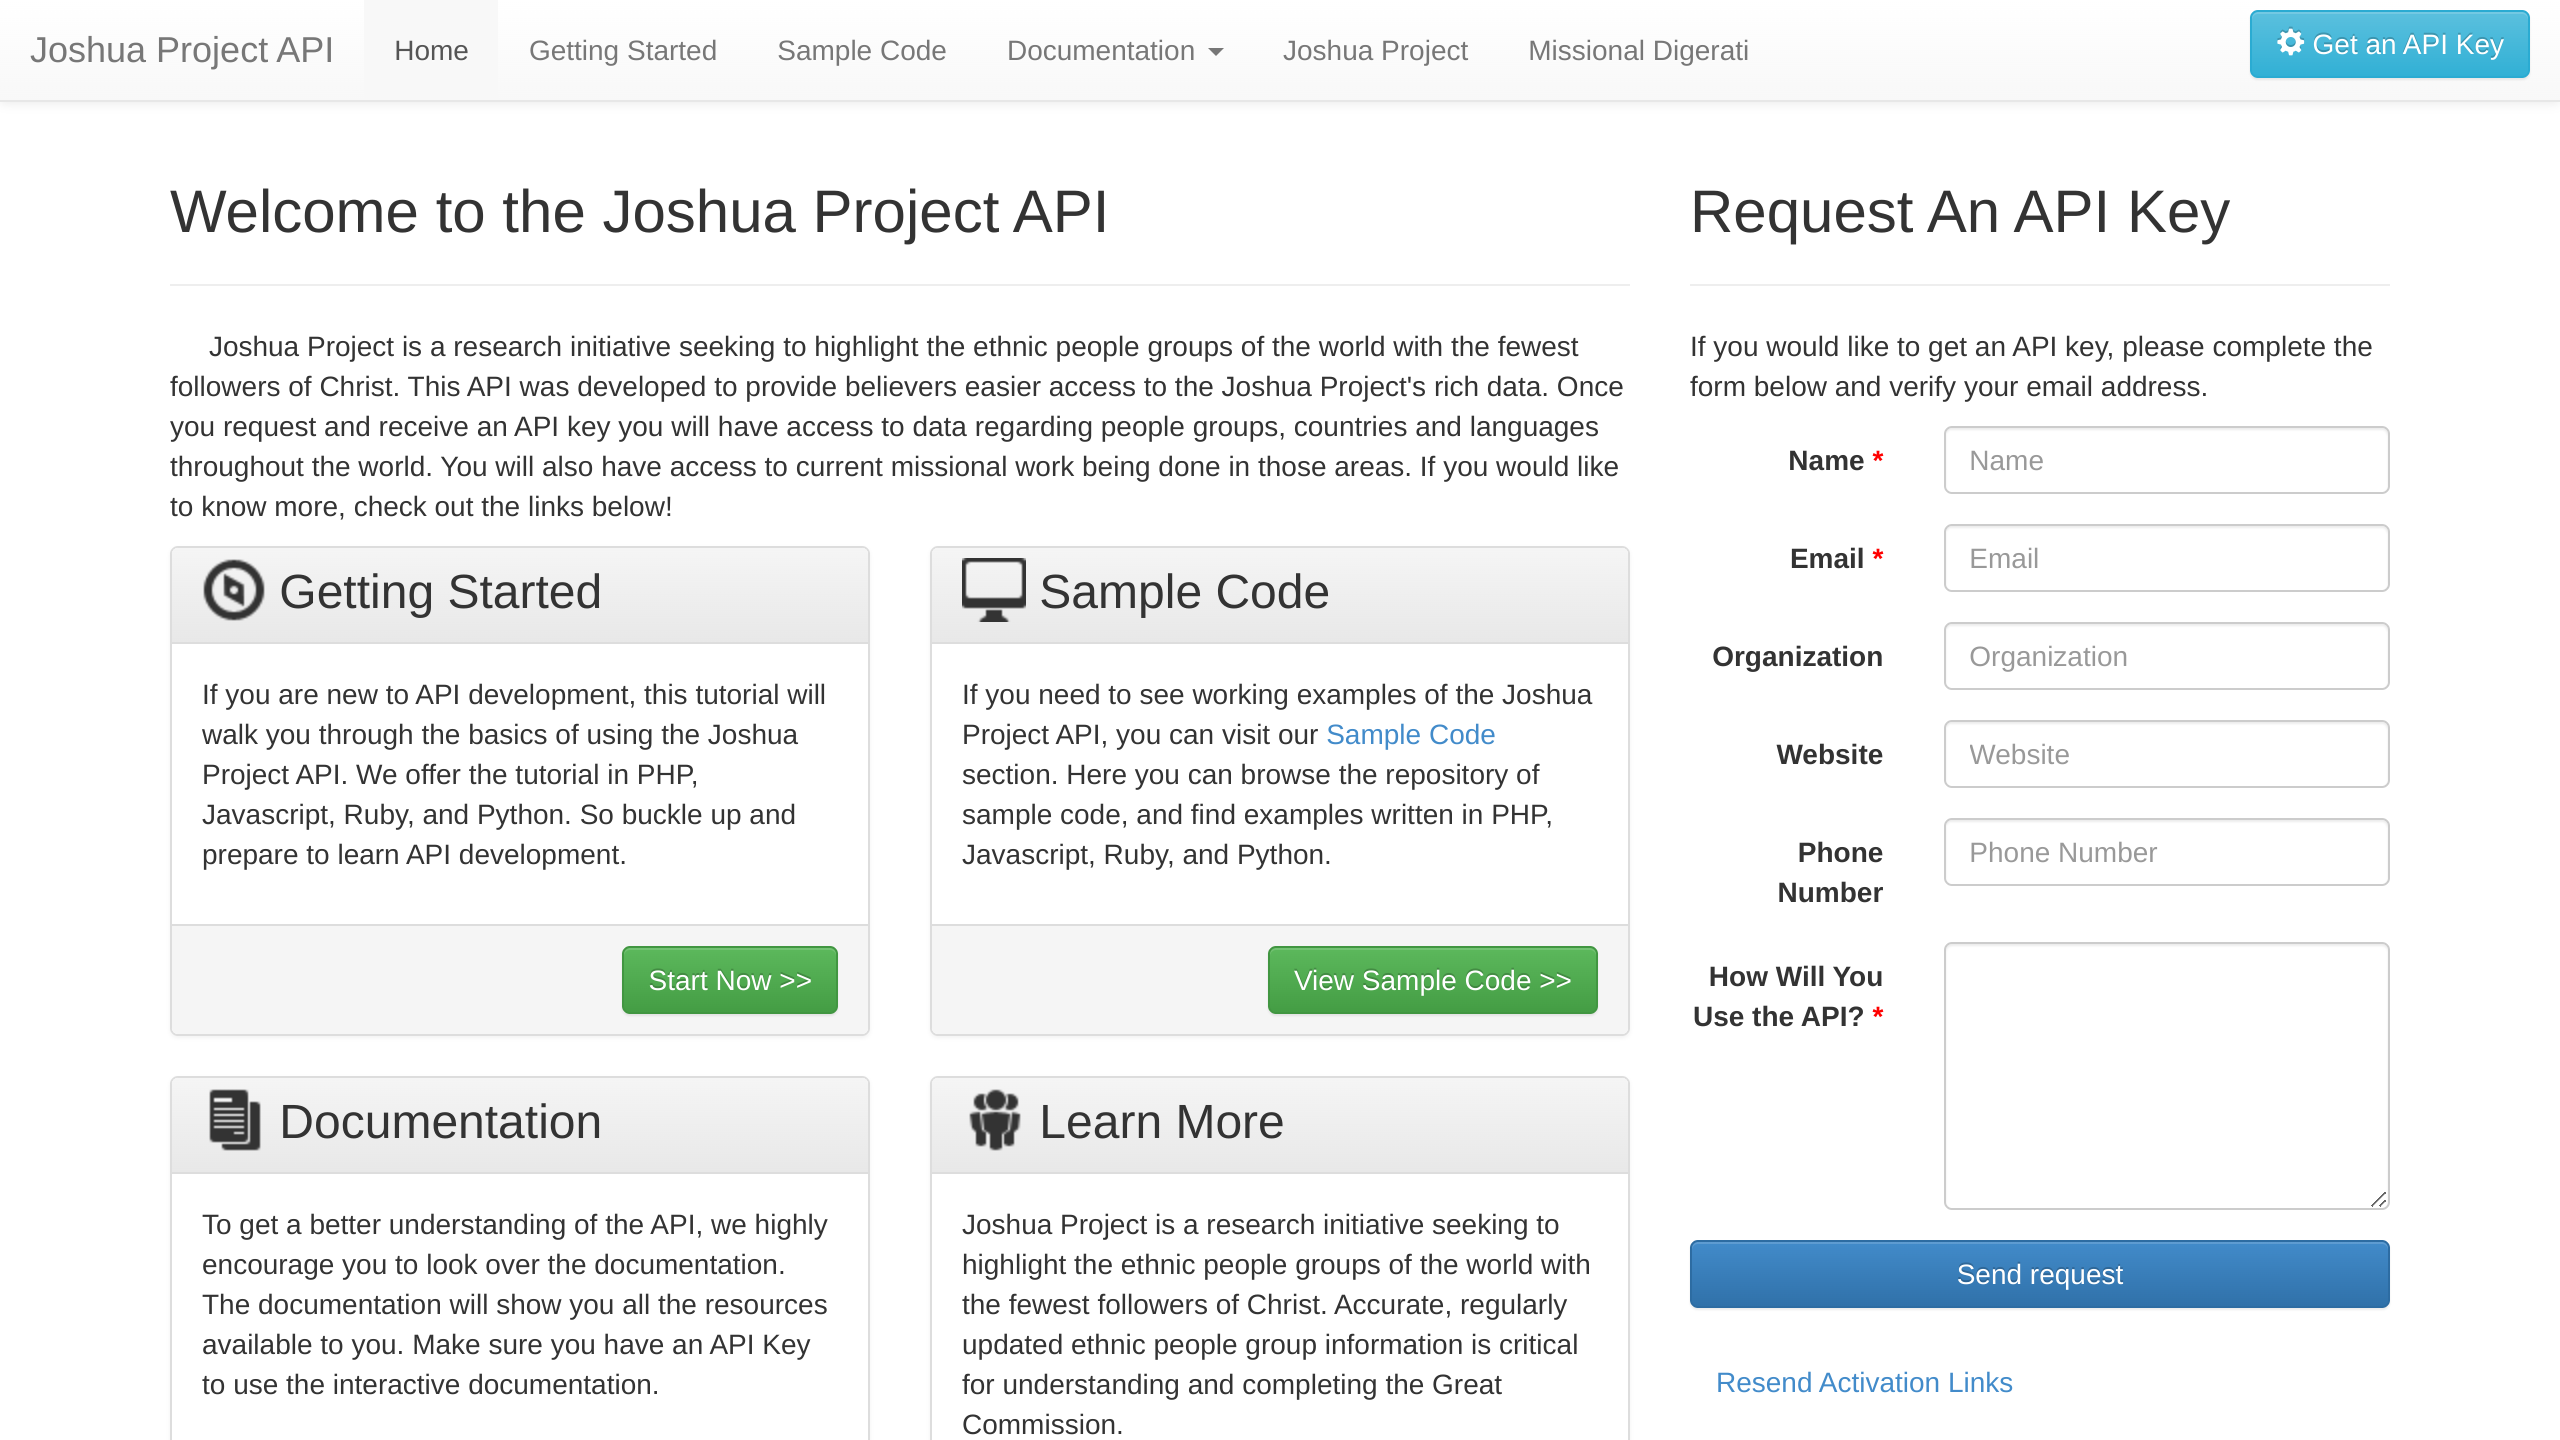 Joshua Project's website screenshot